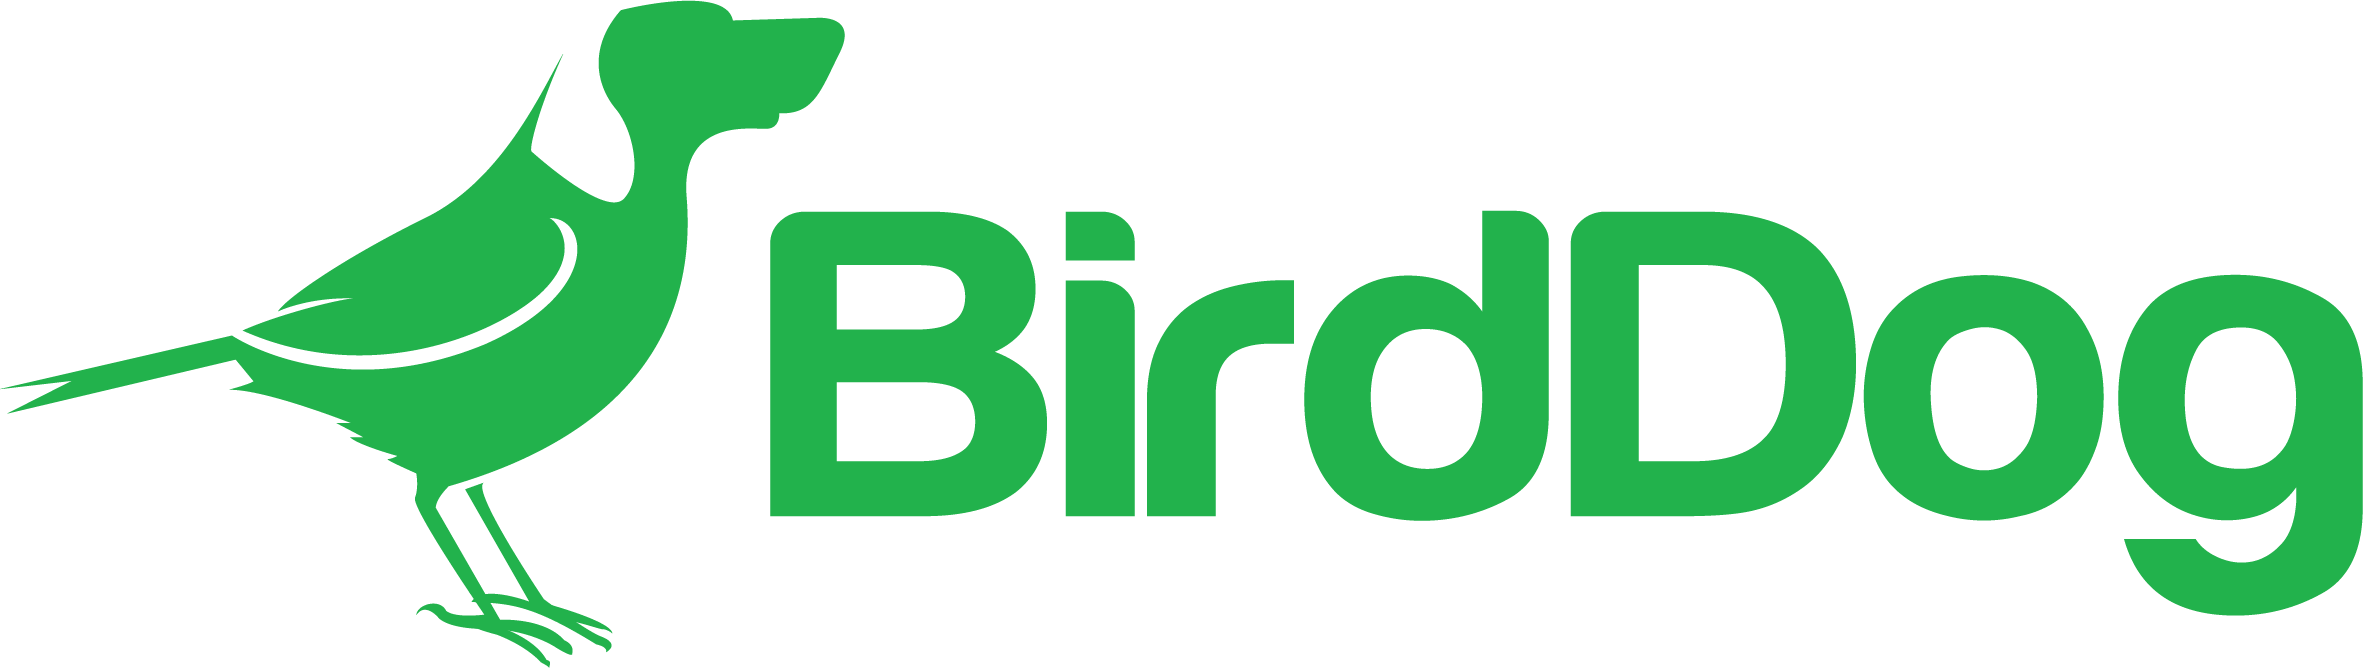 BirdDog-LOGO.png